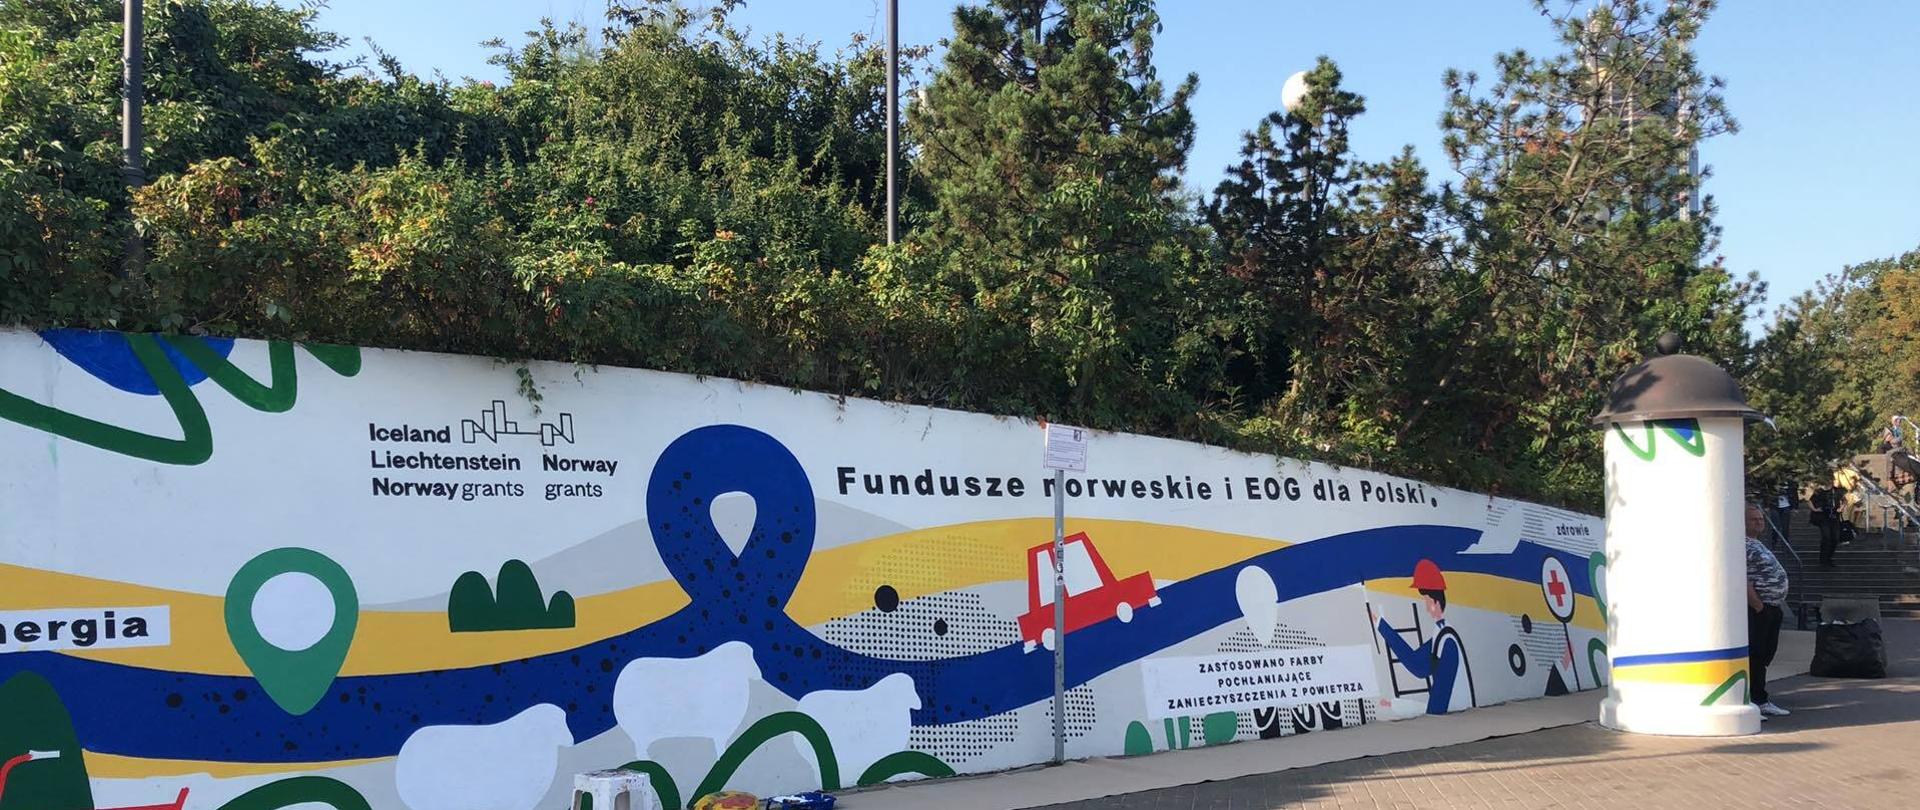 Fundusze_norweskie_mural